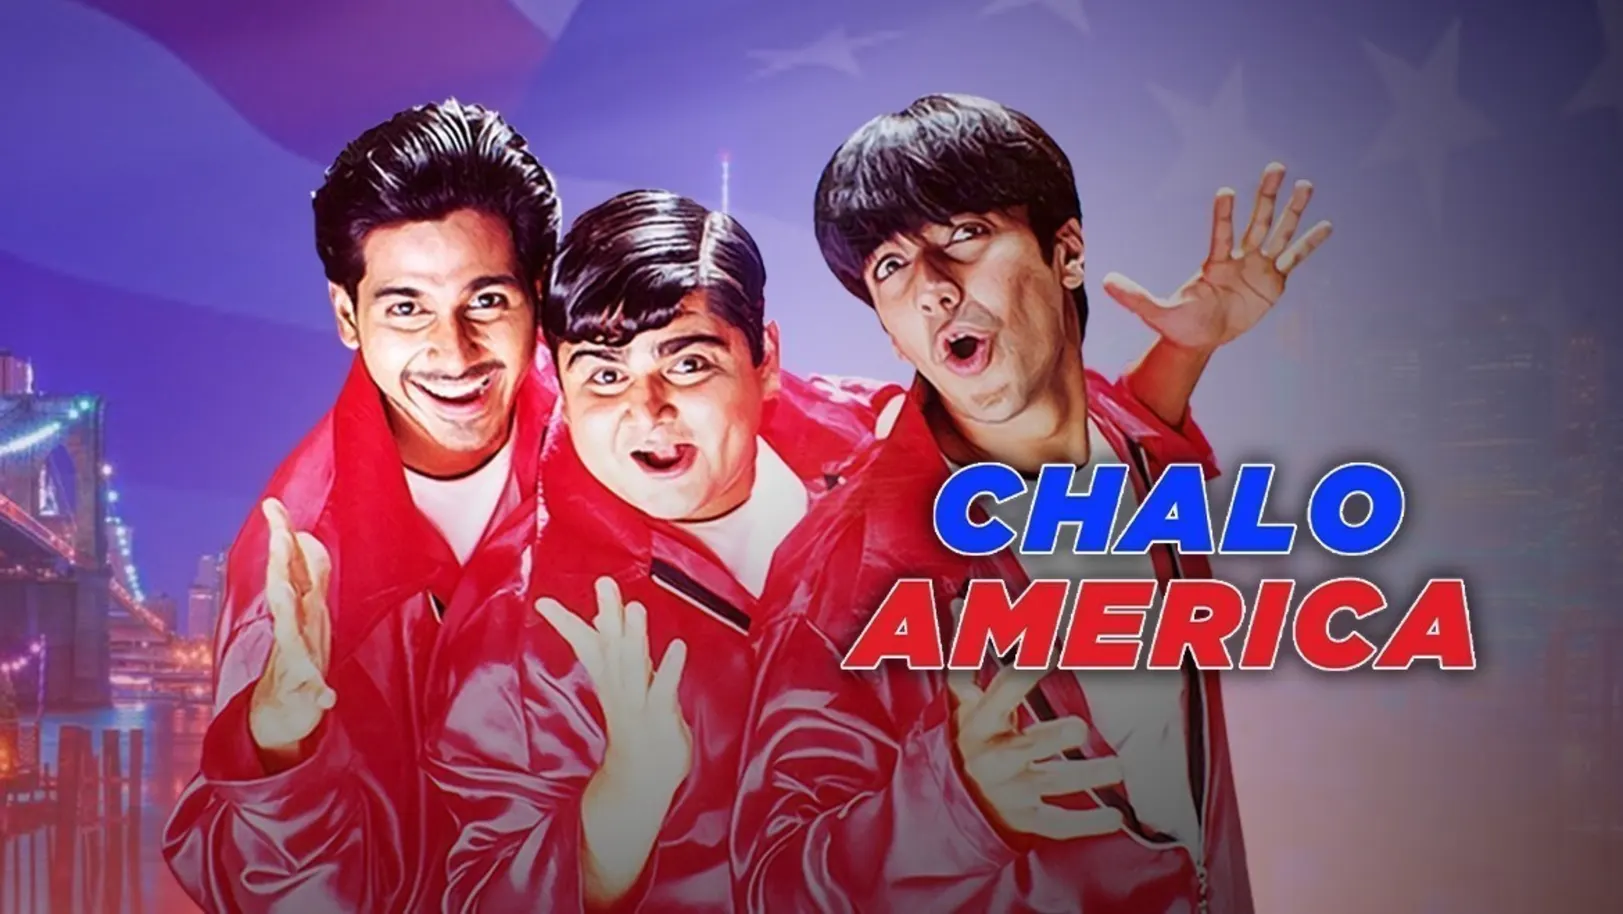 Chalo America Movie